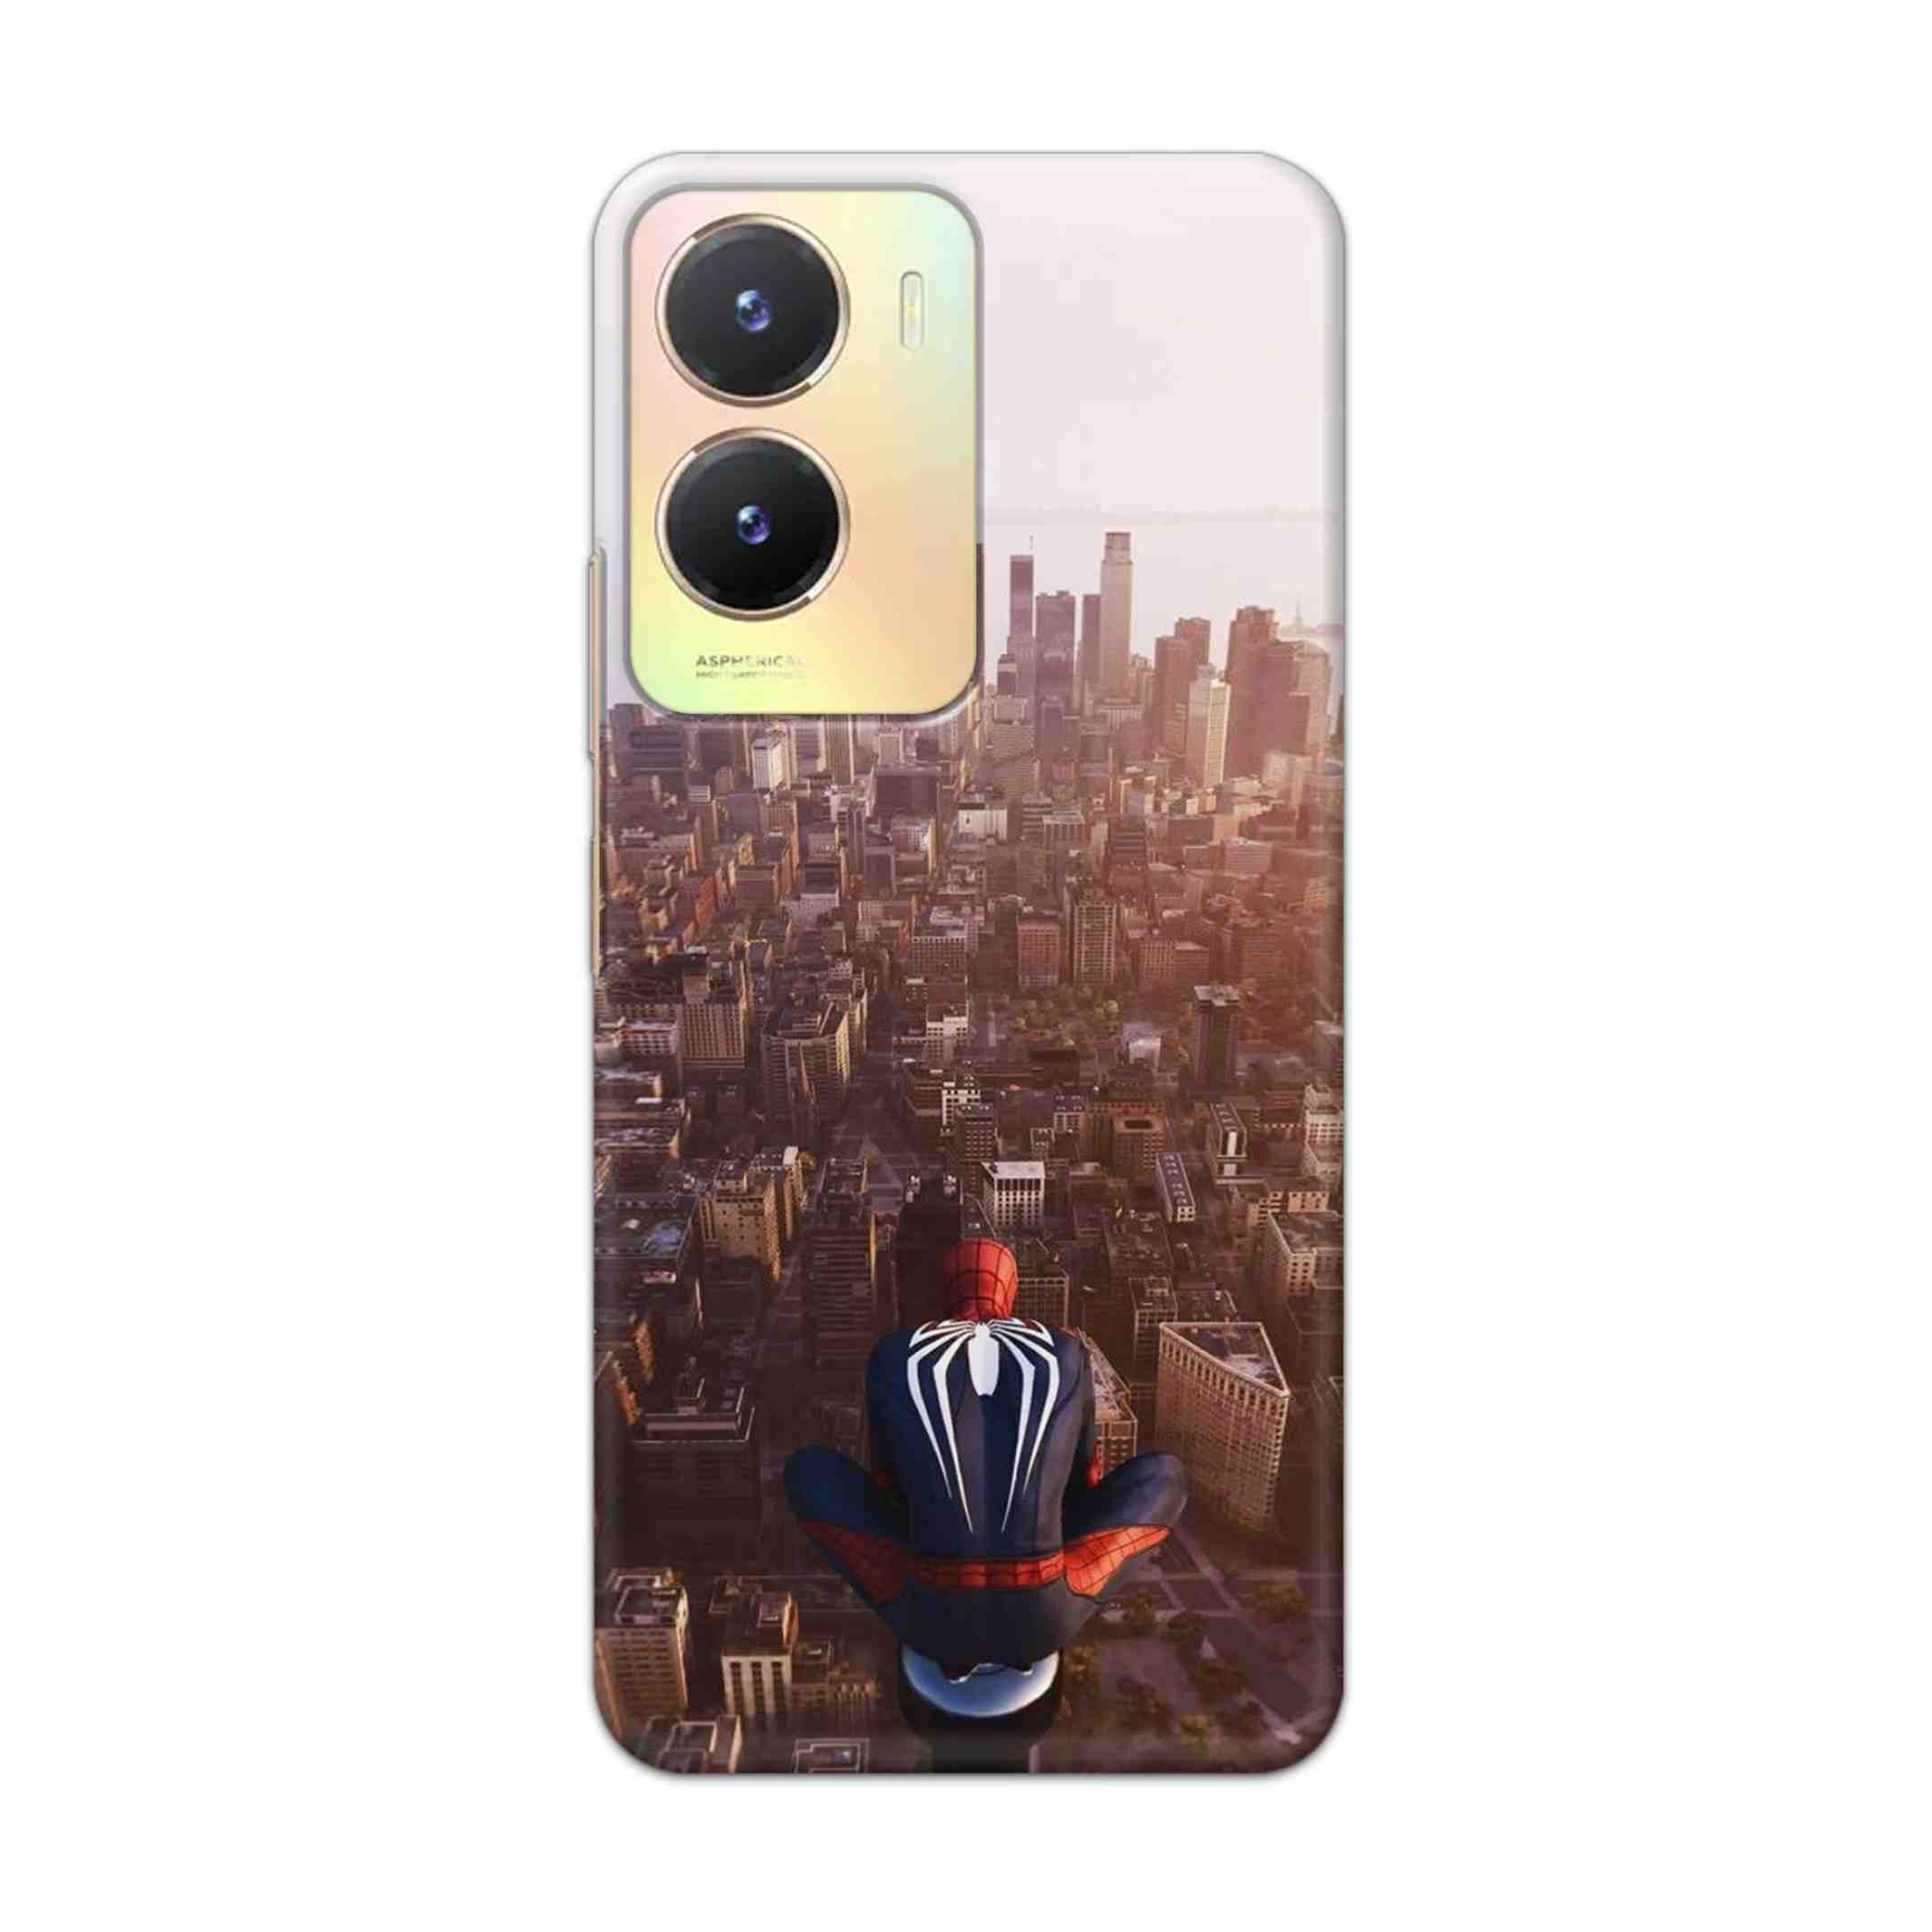 Buy City Of Spiderman Hard Back Mobile Phone Case Cover For Vivo T2x Online